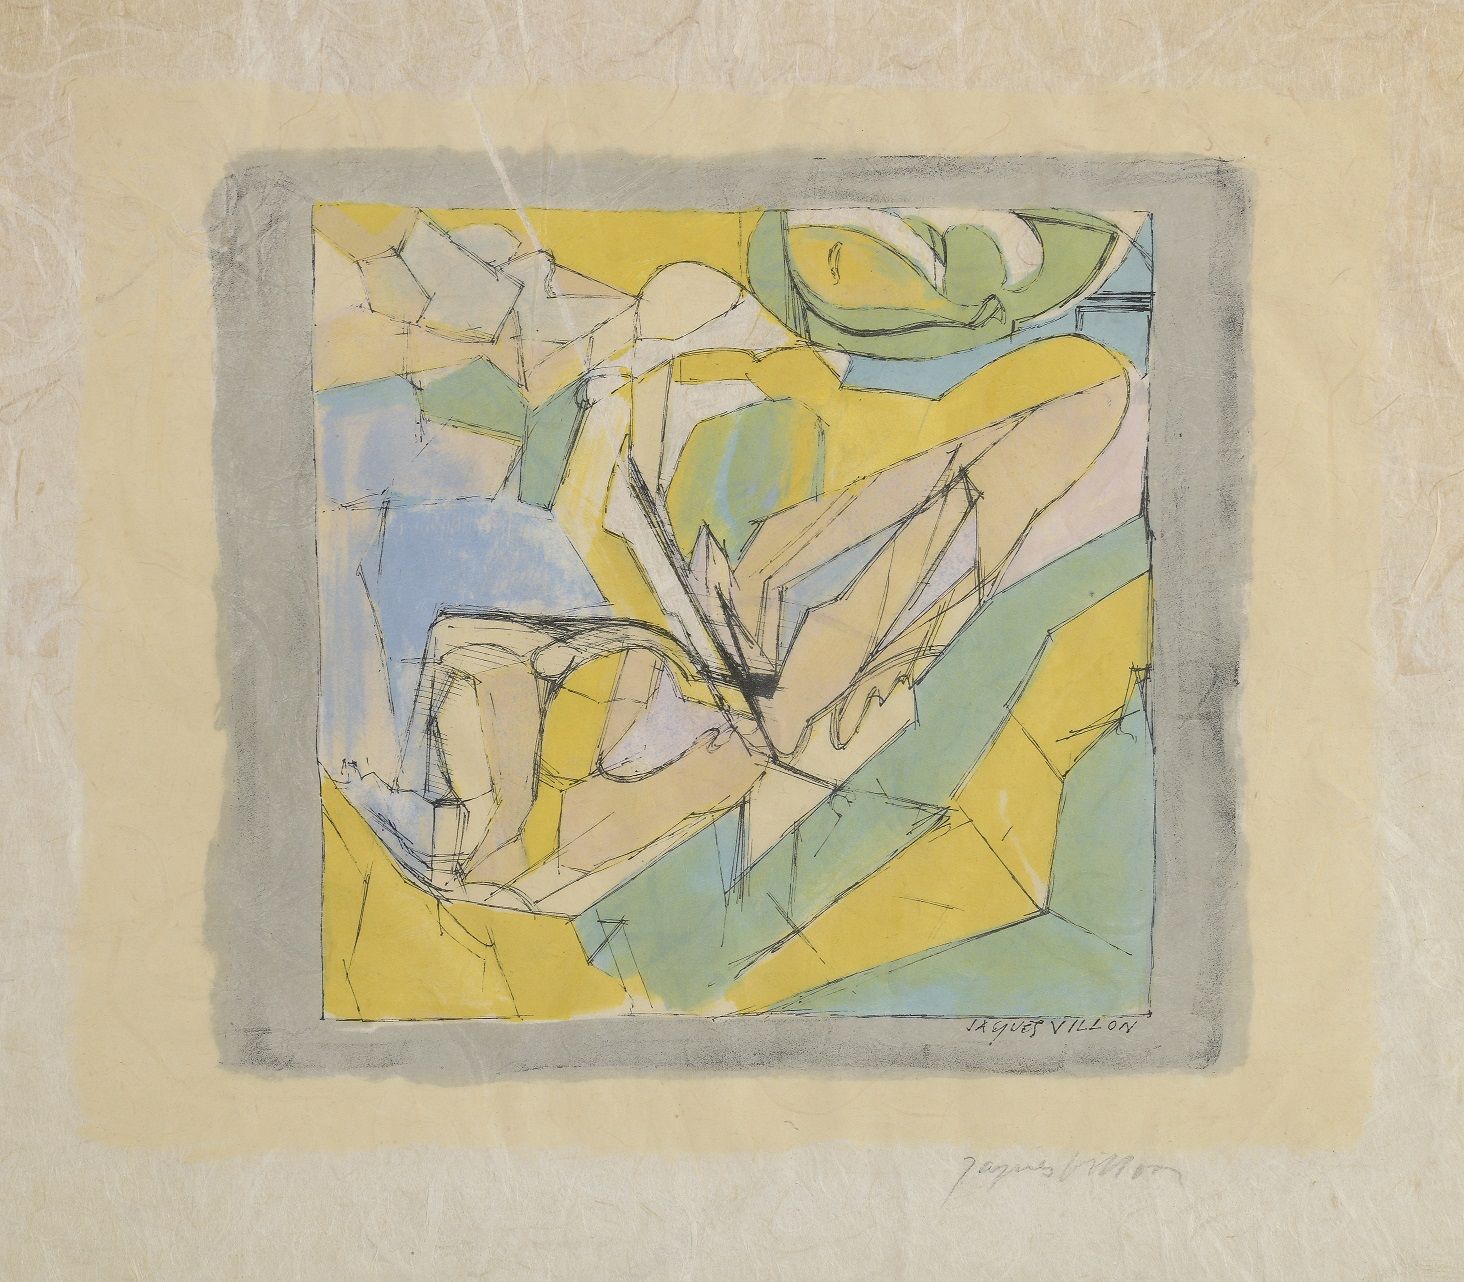 Null 雅克-维隆(1875-1963年)，据说

无题。

彩色石版画签名。微微发黄。

25 x 31.2厘米。纸张：49,5 x 64 cm.